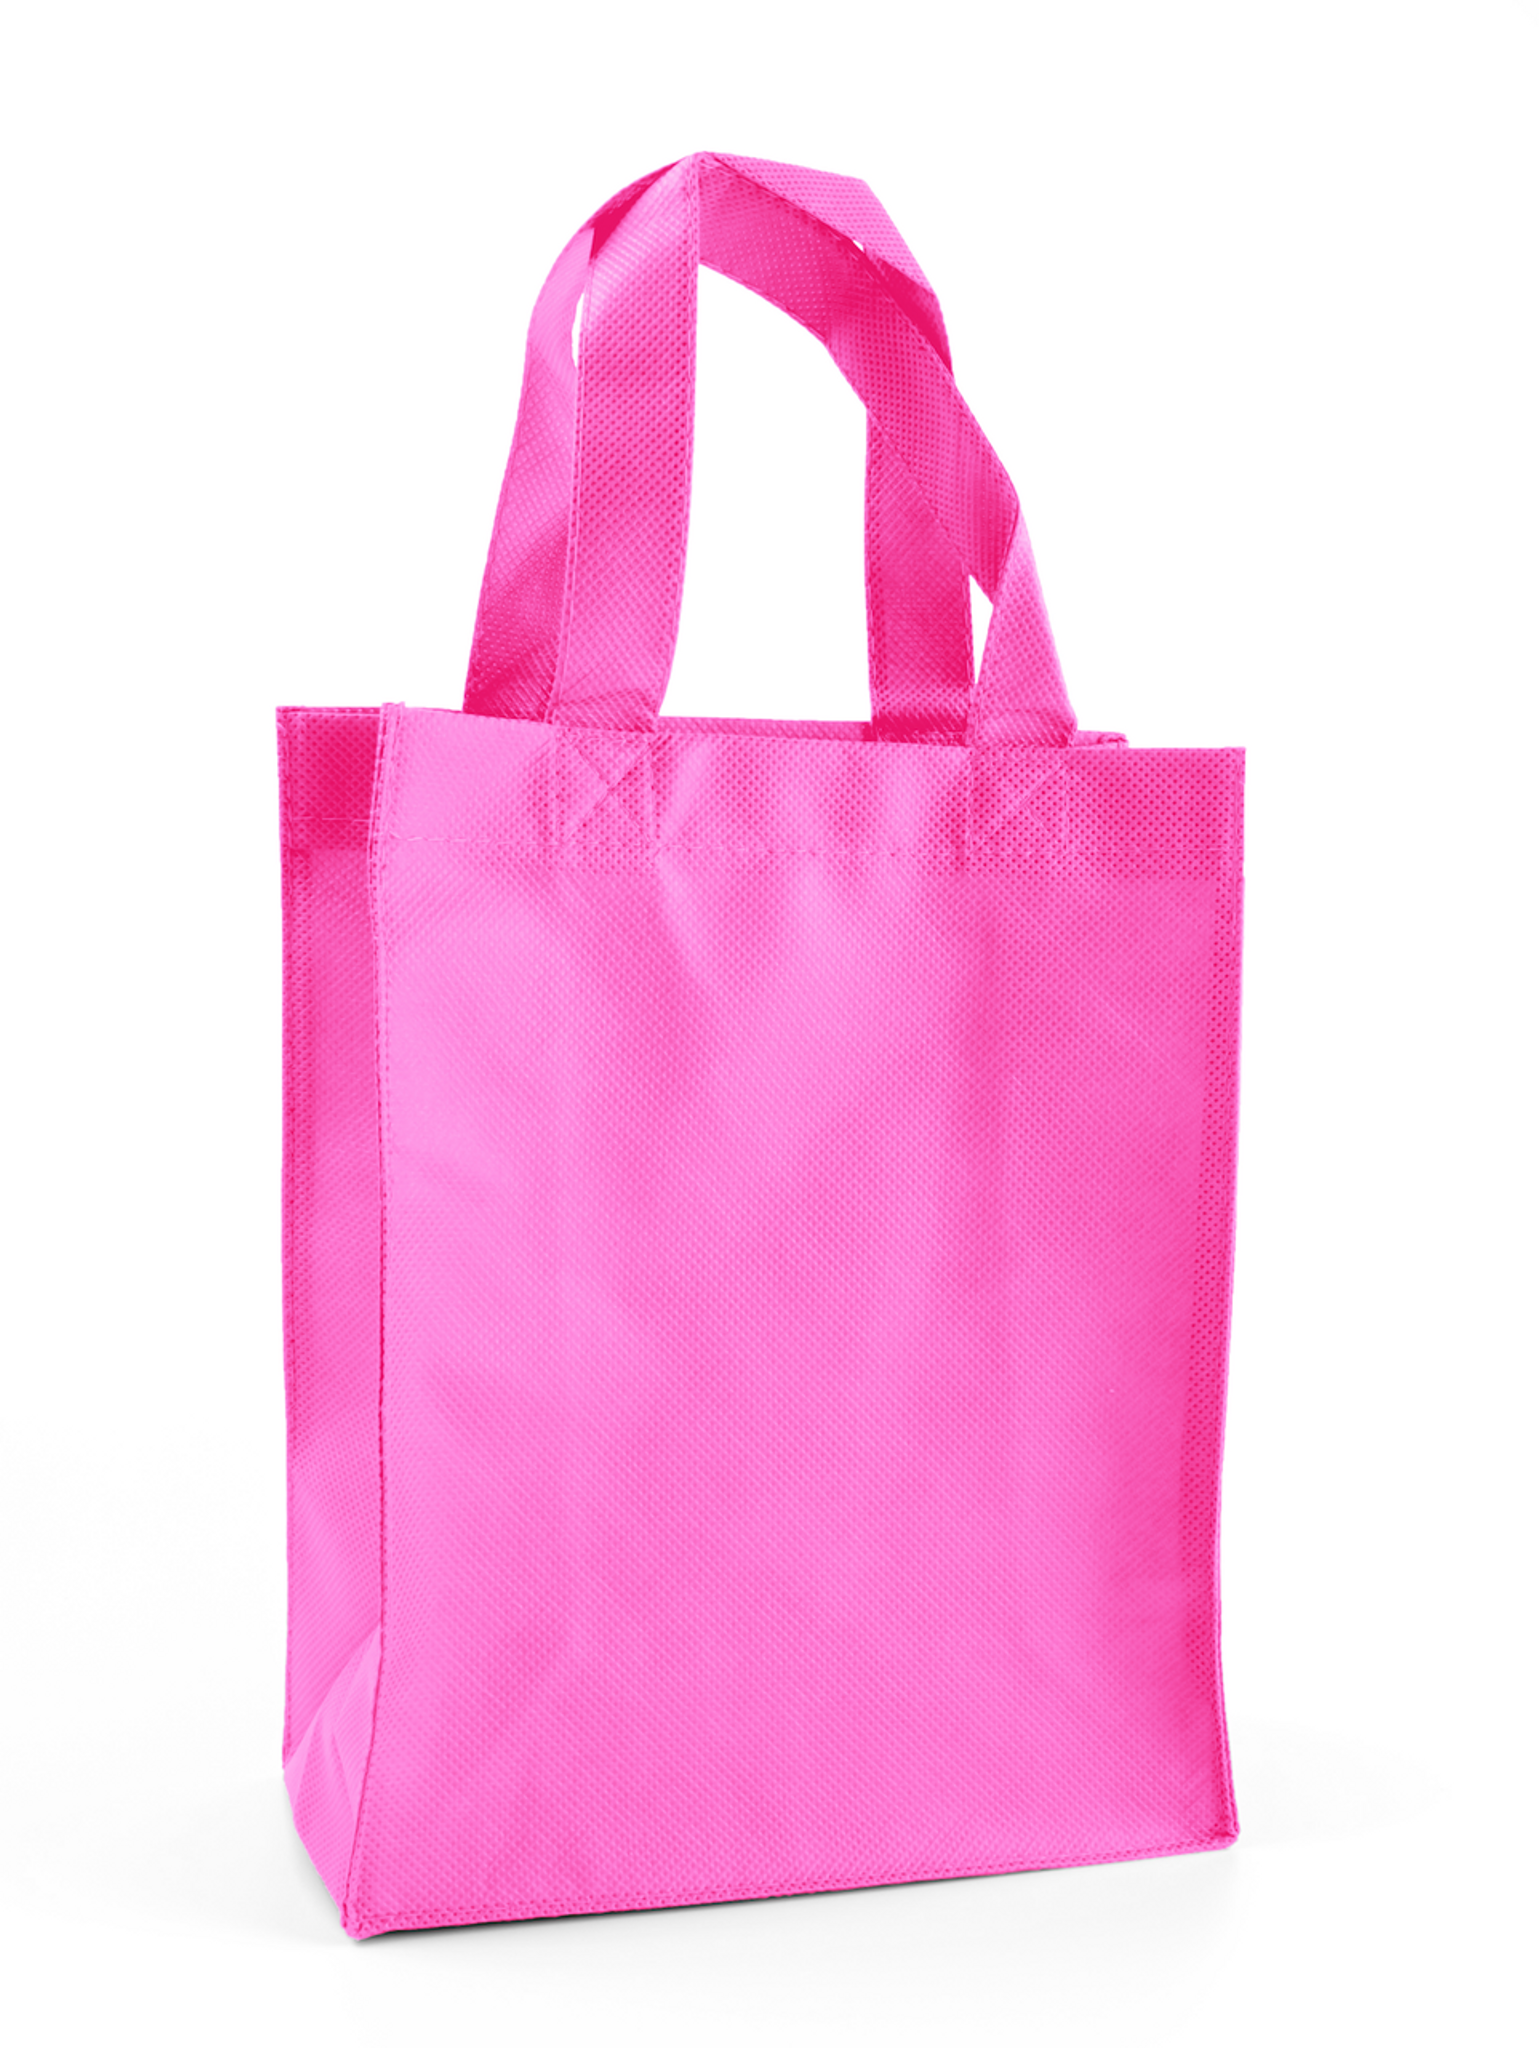 Colorful Shopping Bag Template | Shopping bag design, Promotional design,  Fabric bag design